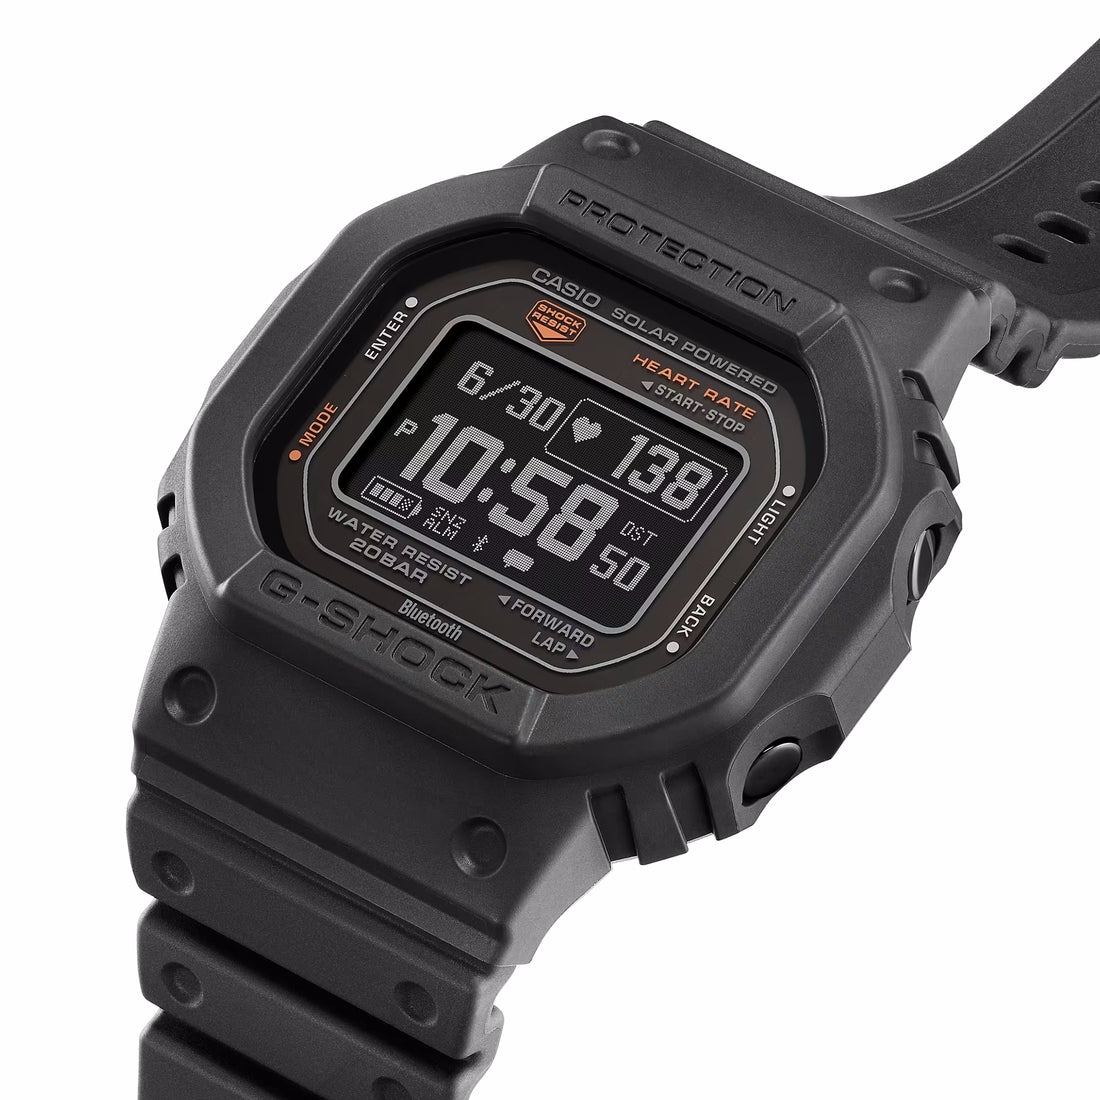 Orologio G-Shock GW-H5600-1ER sensore cardio e solare